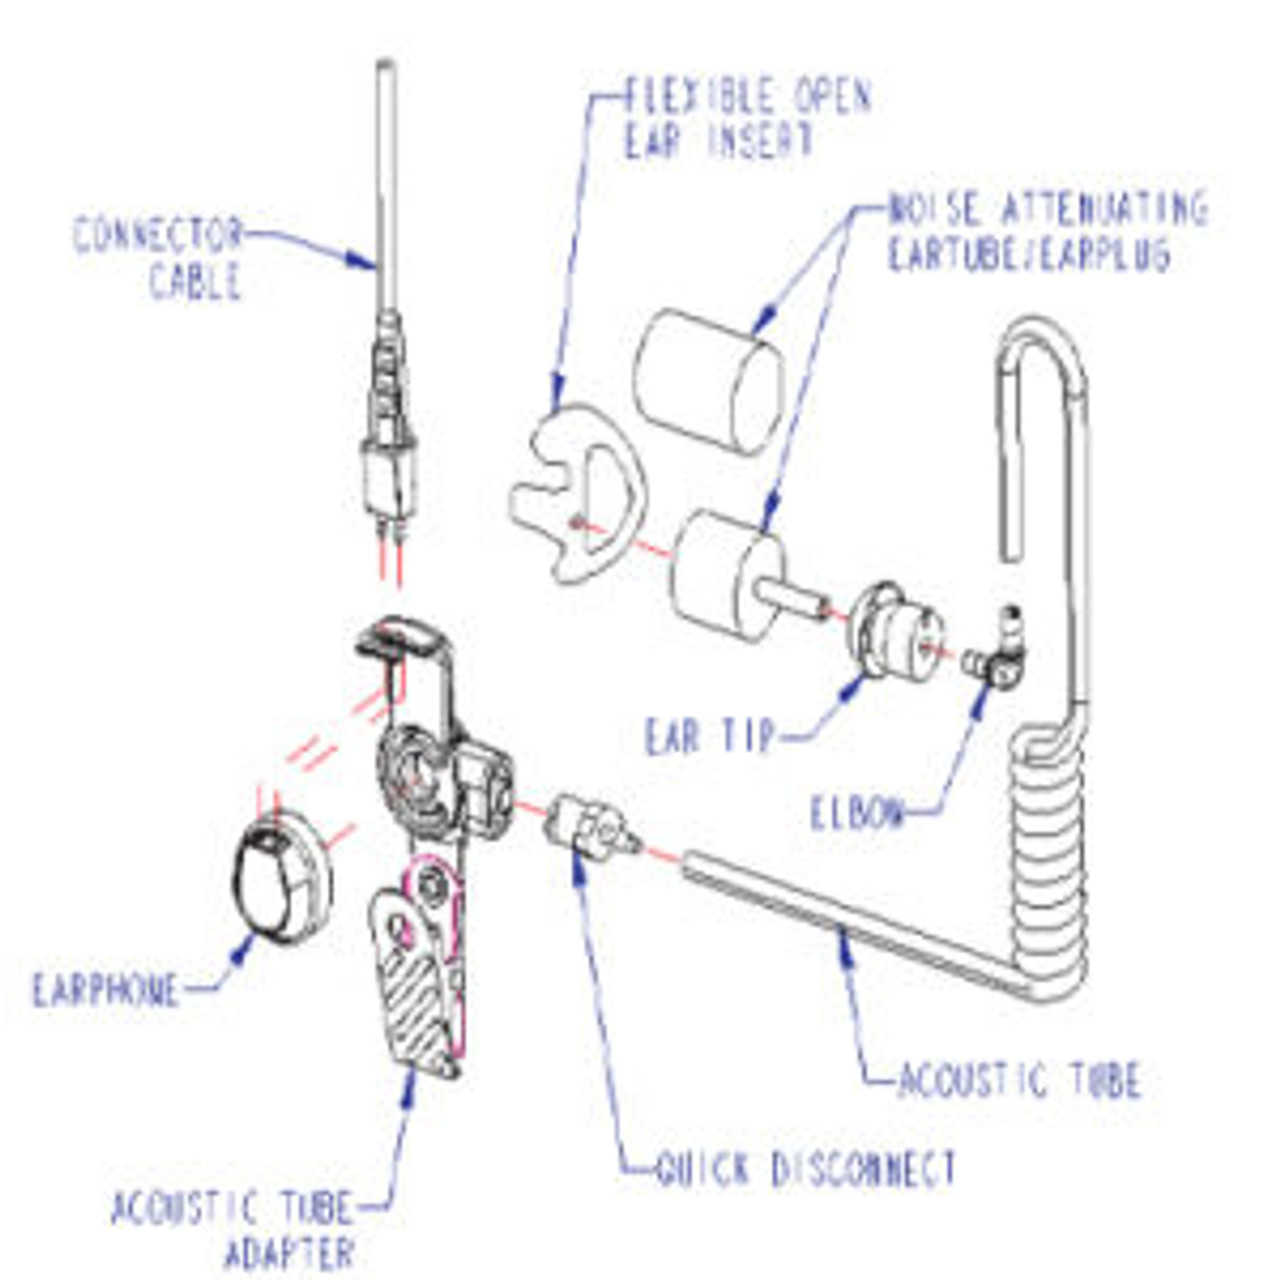 Otto Two Wire Surveillance Kit For Motorola XPR7000e Series